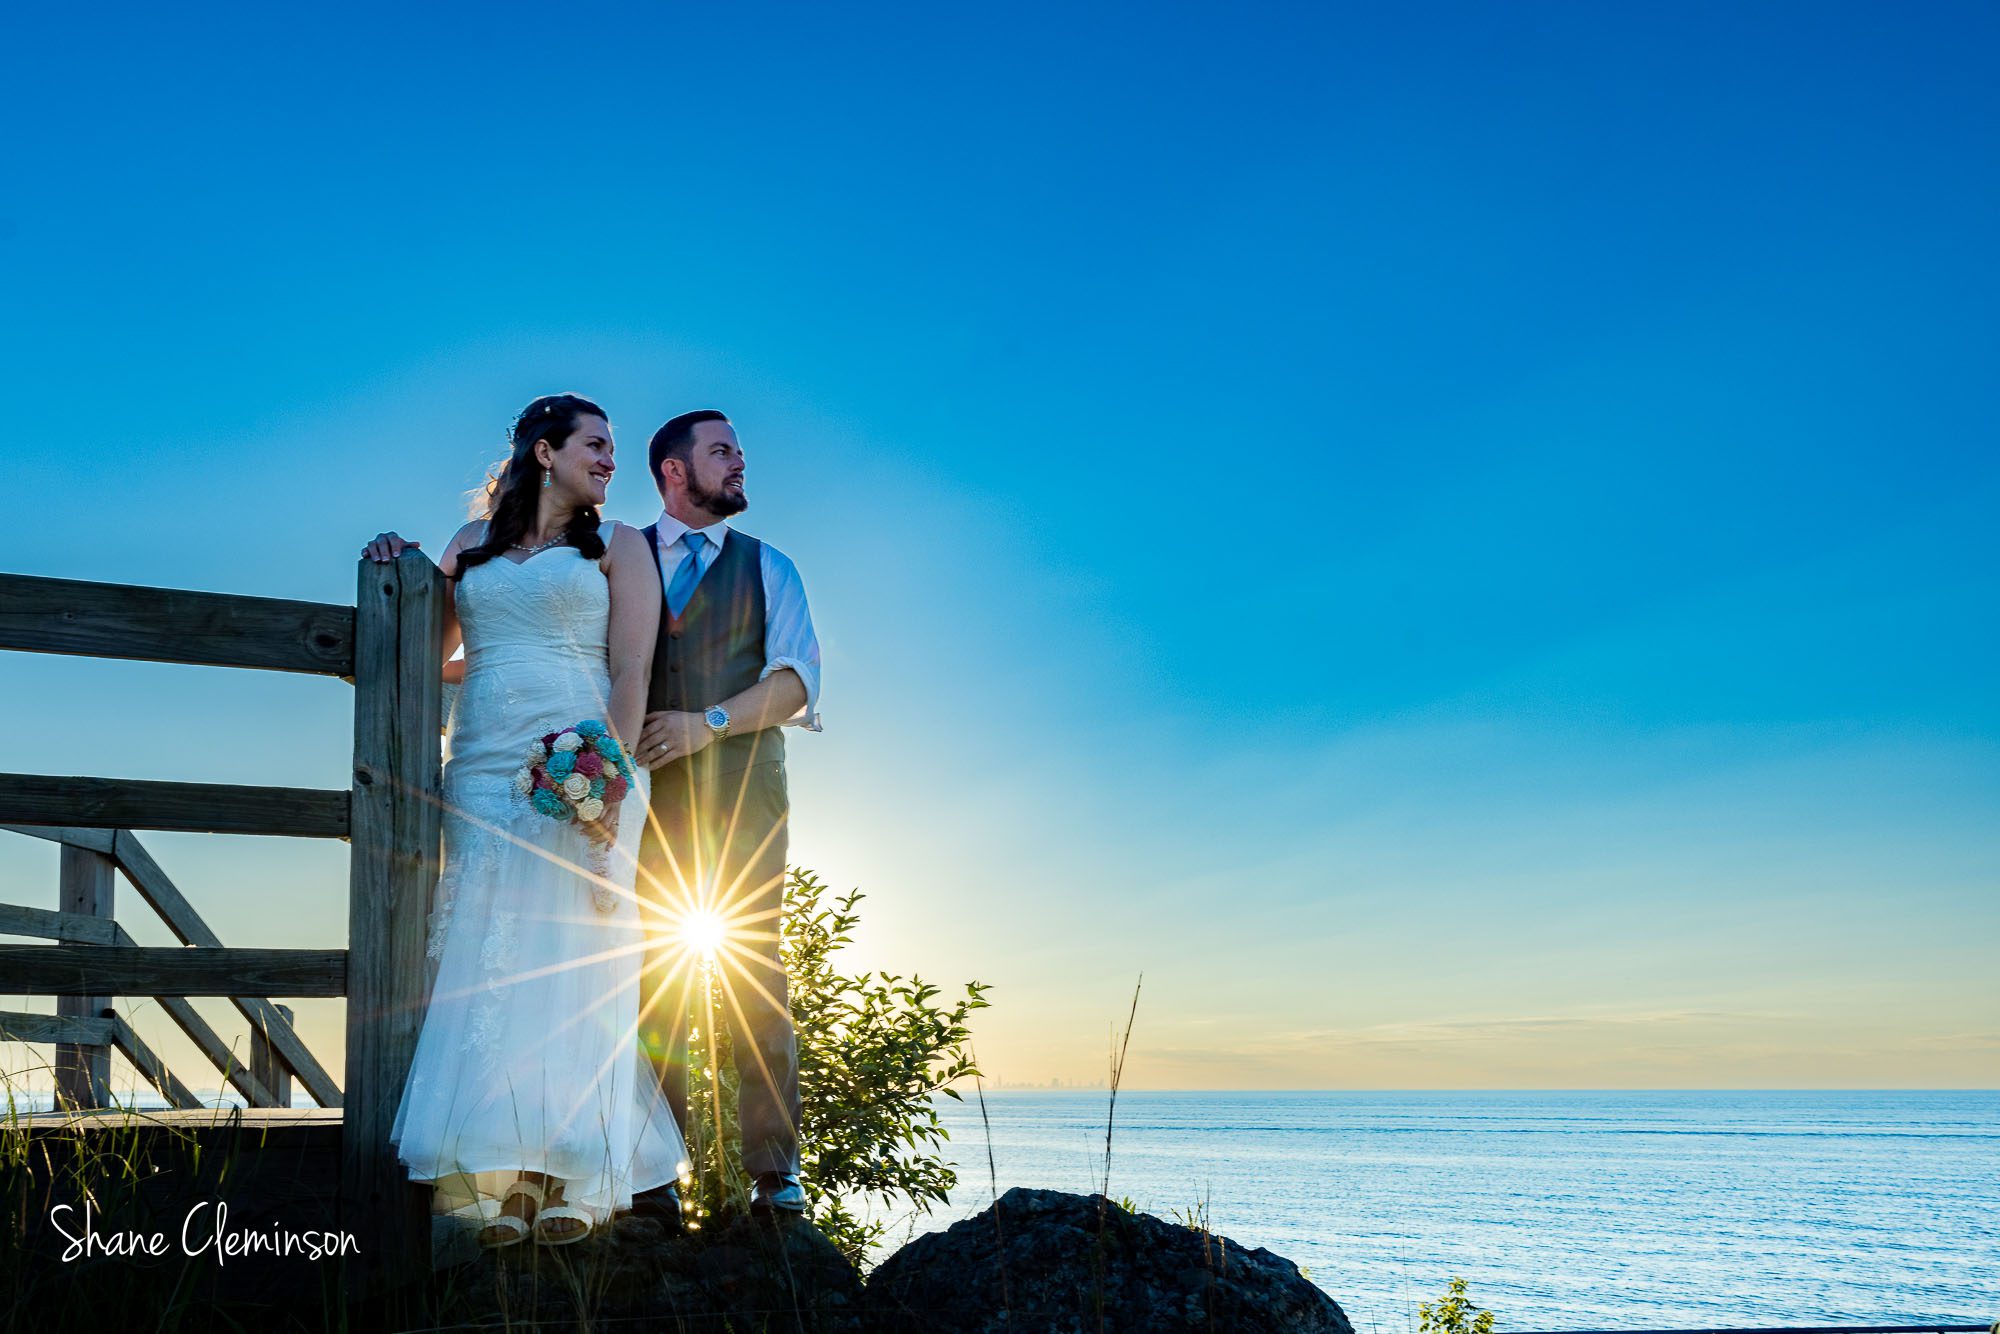 Portage Lakefront and Riverwalk Pavilion Wedding